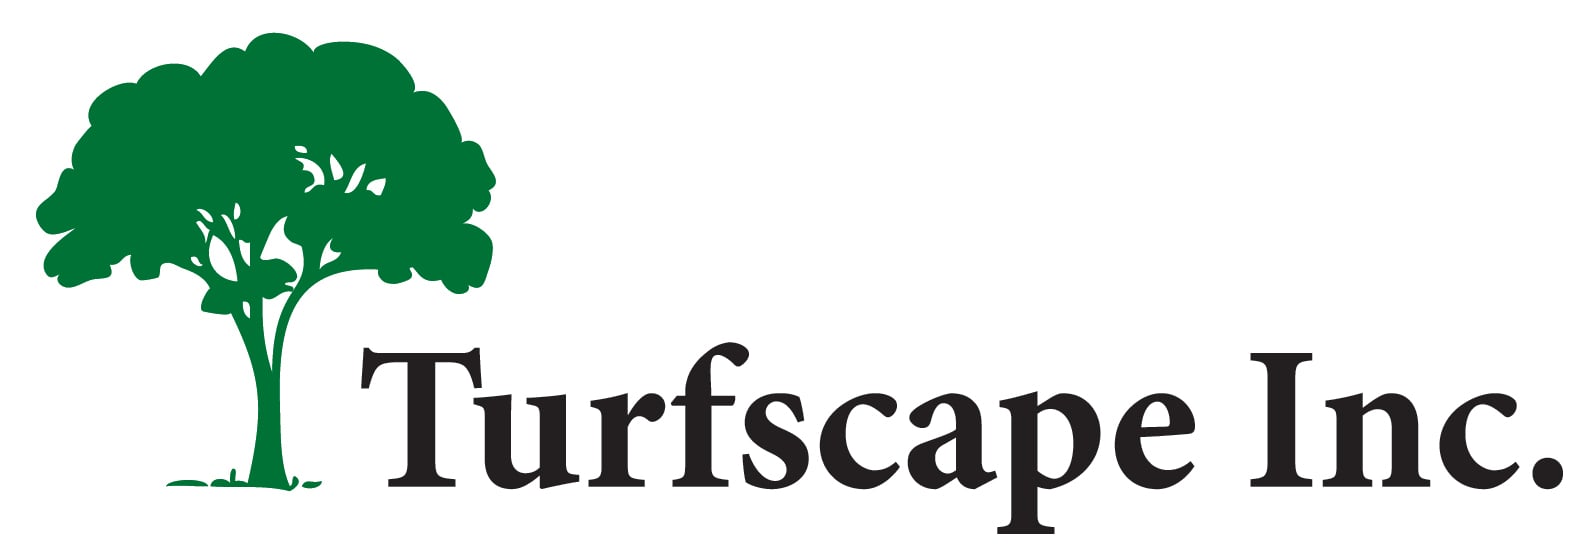 turfscape inc logo